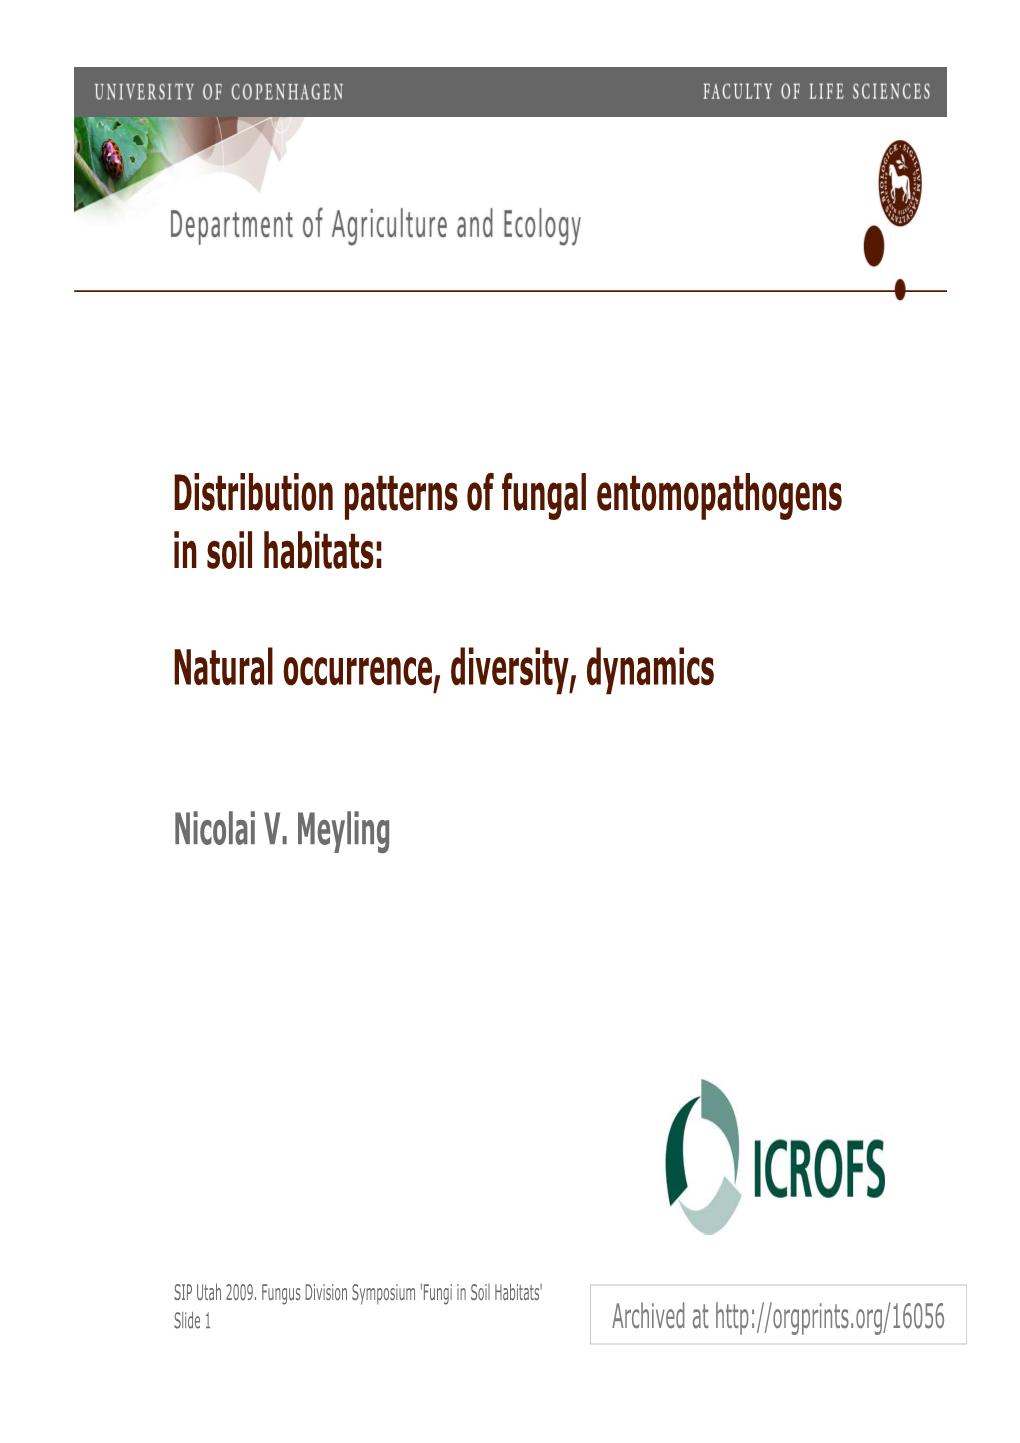 Distribution Patterns of Fungal Entomopathogens in Soil Habitats